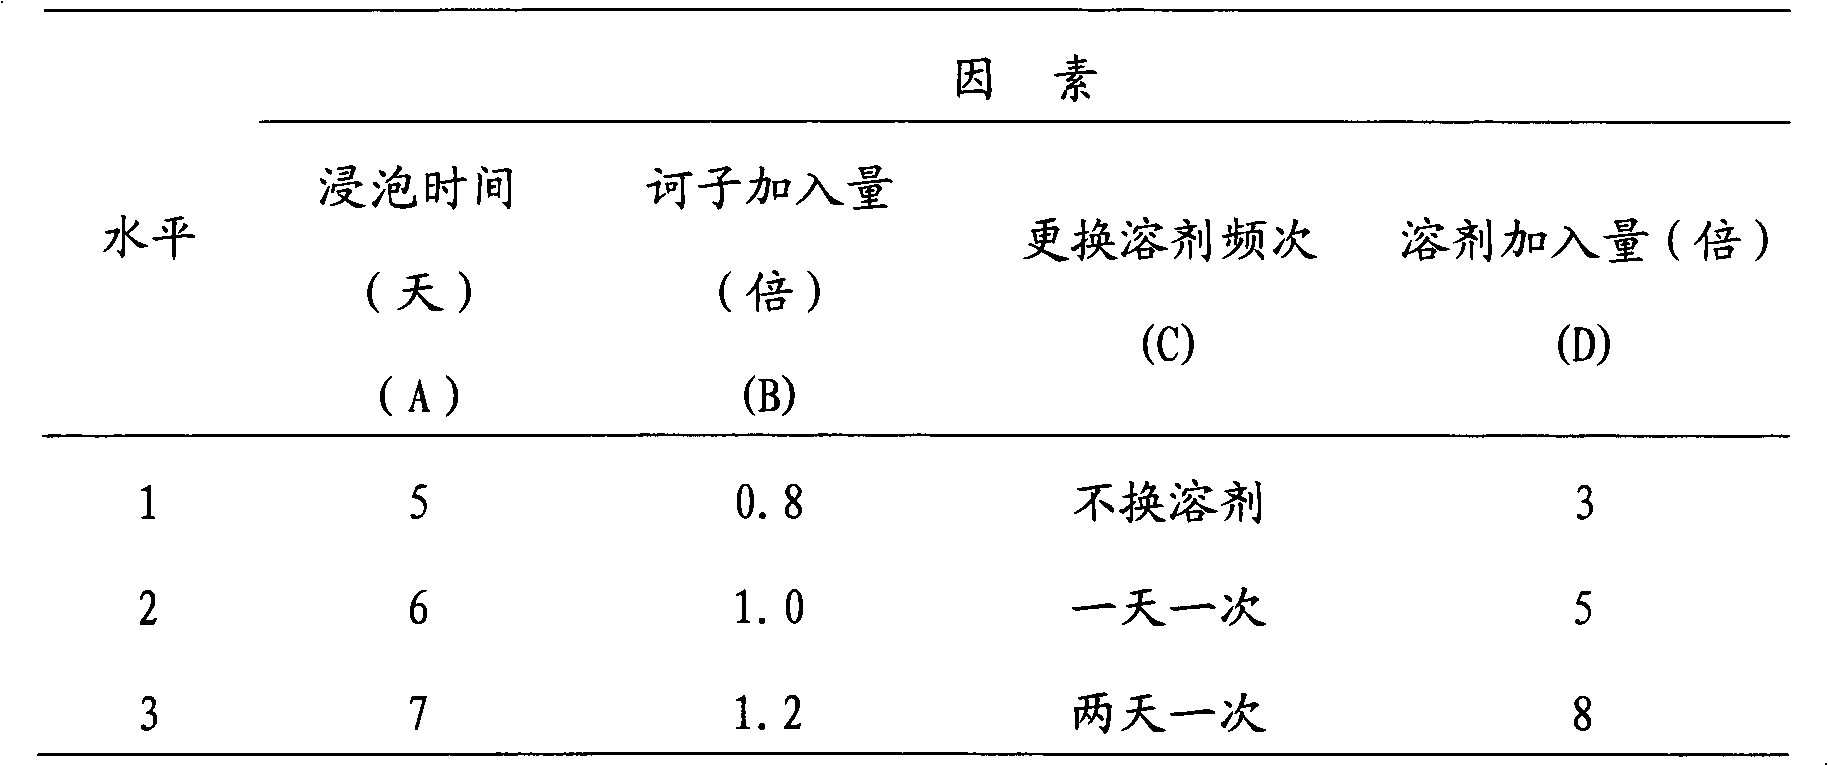 Processing method of myrobalan-processed kusnezoff monkshood root as mongolian medicine